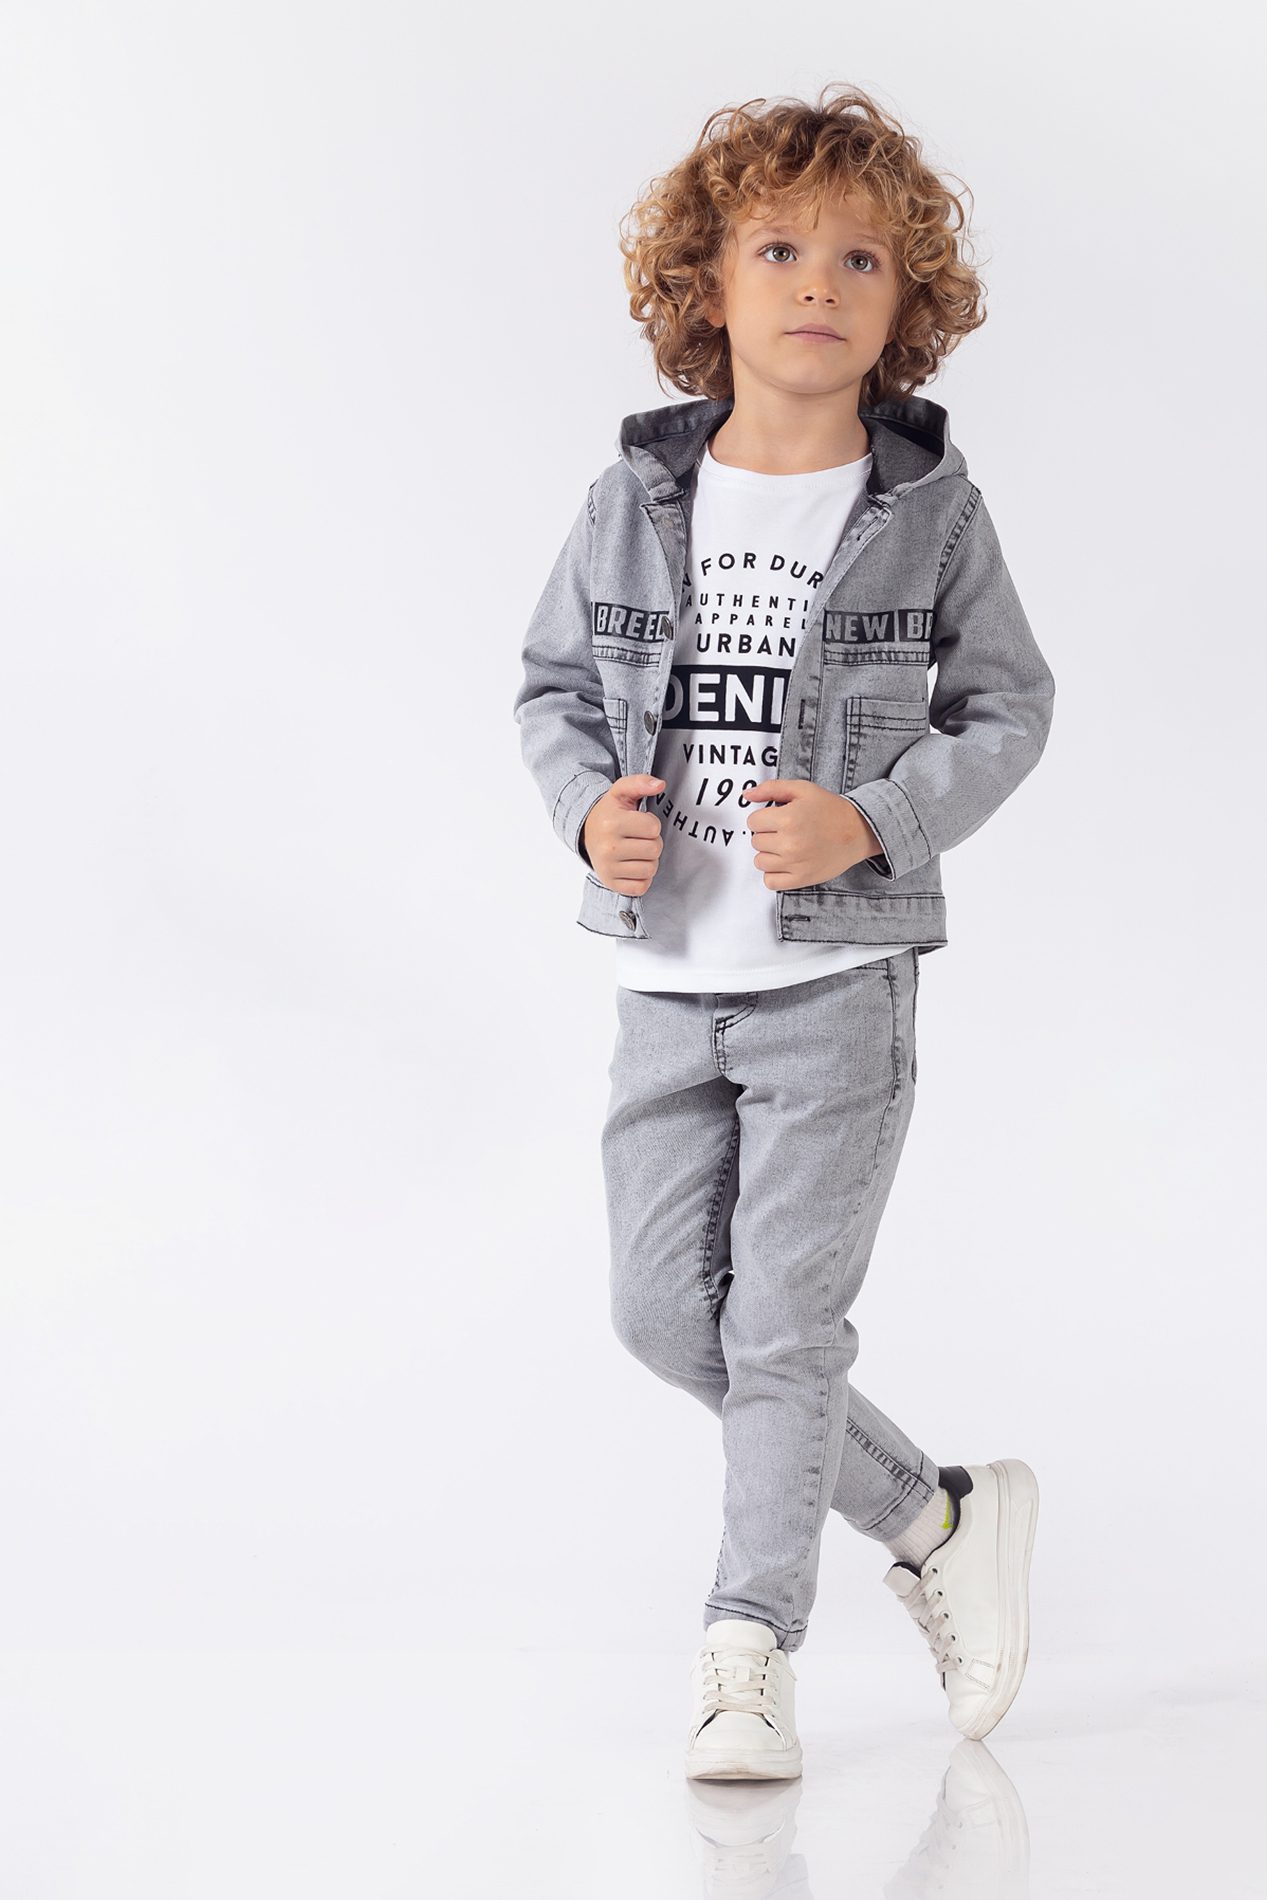 Boy 3 Pieces Denim Suit Set (Jacket + T-Shirt + Jean) / 2-5Y Or 6-9Y - Kids Fashion Turkey